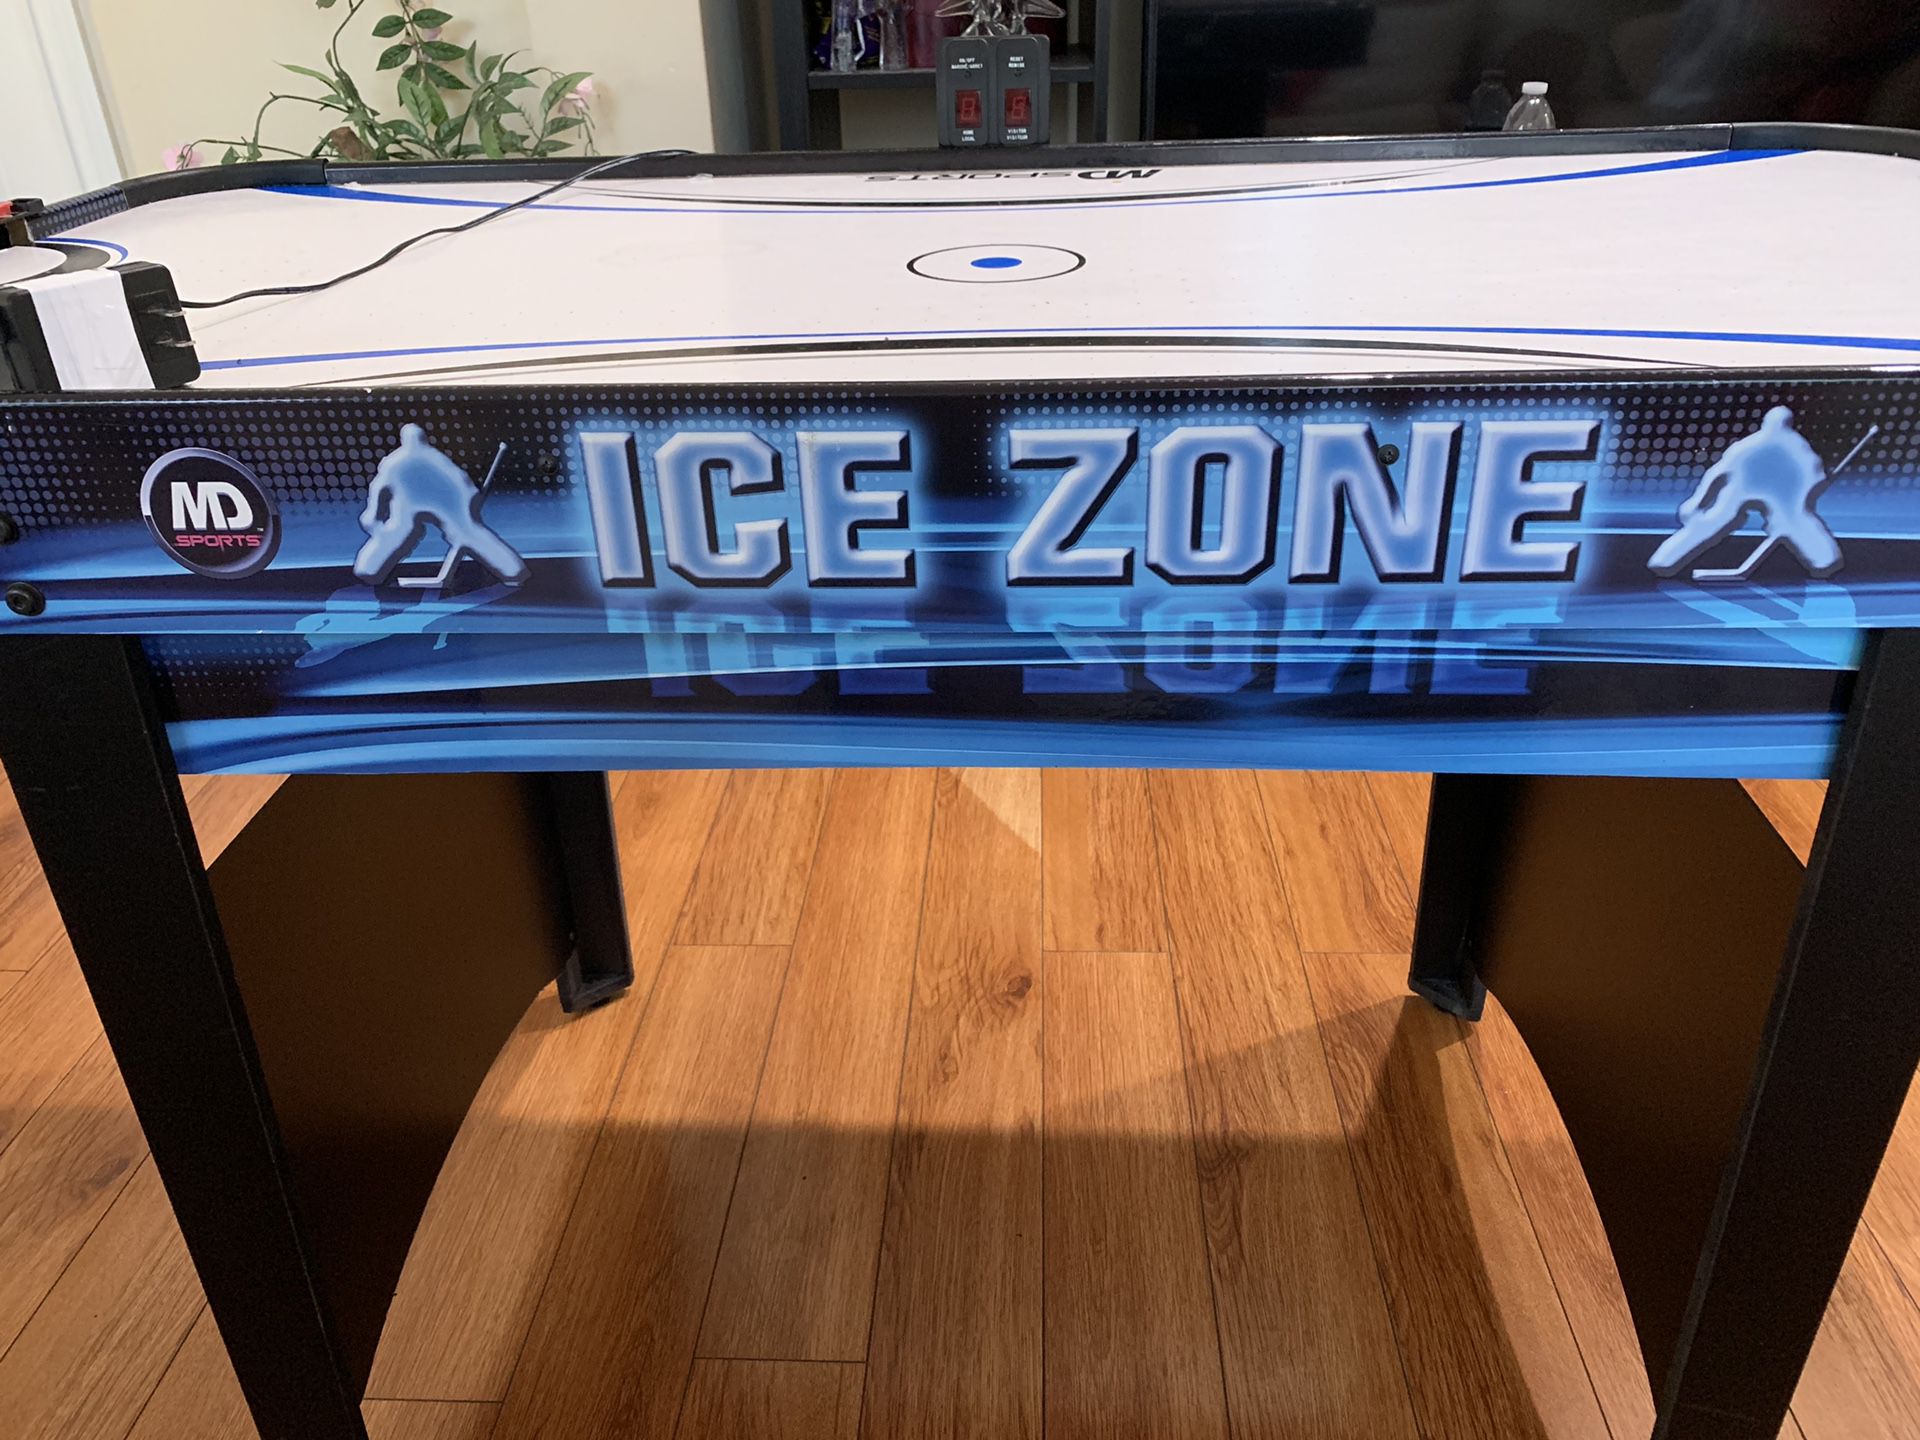 Ice zone air hockey table